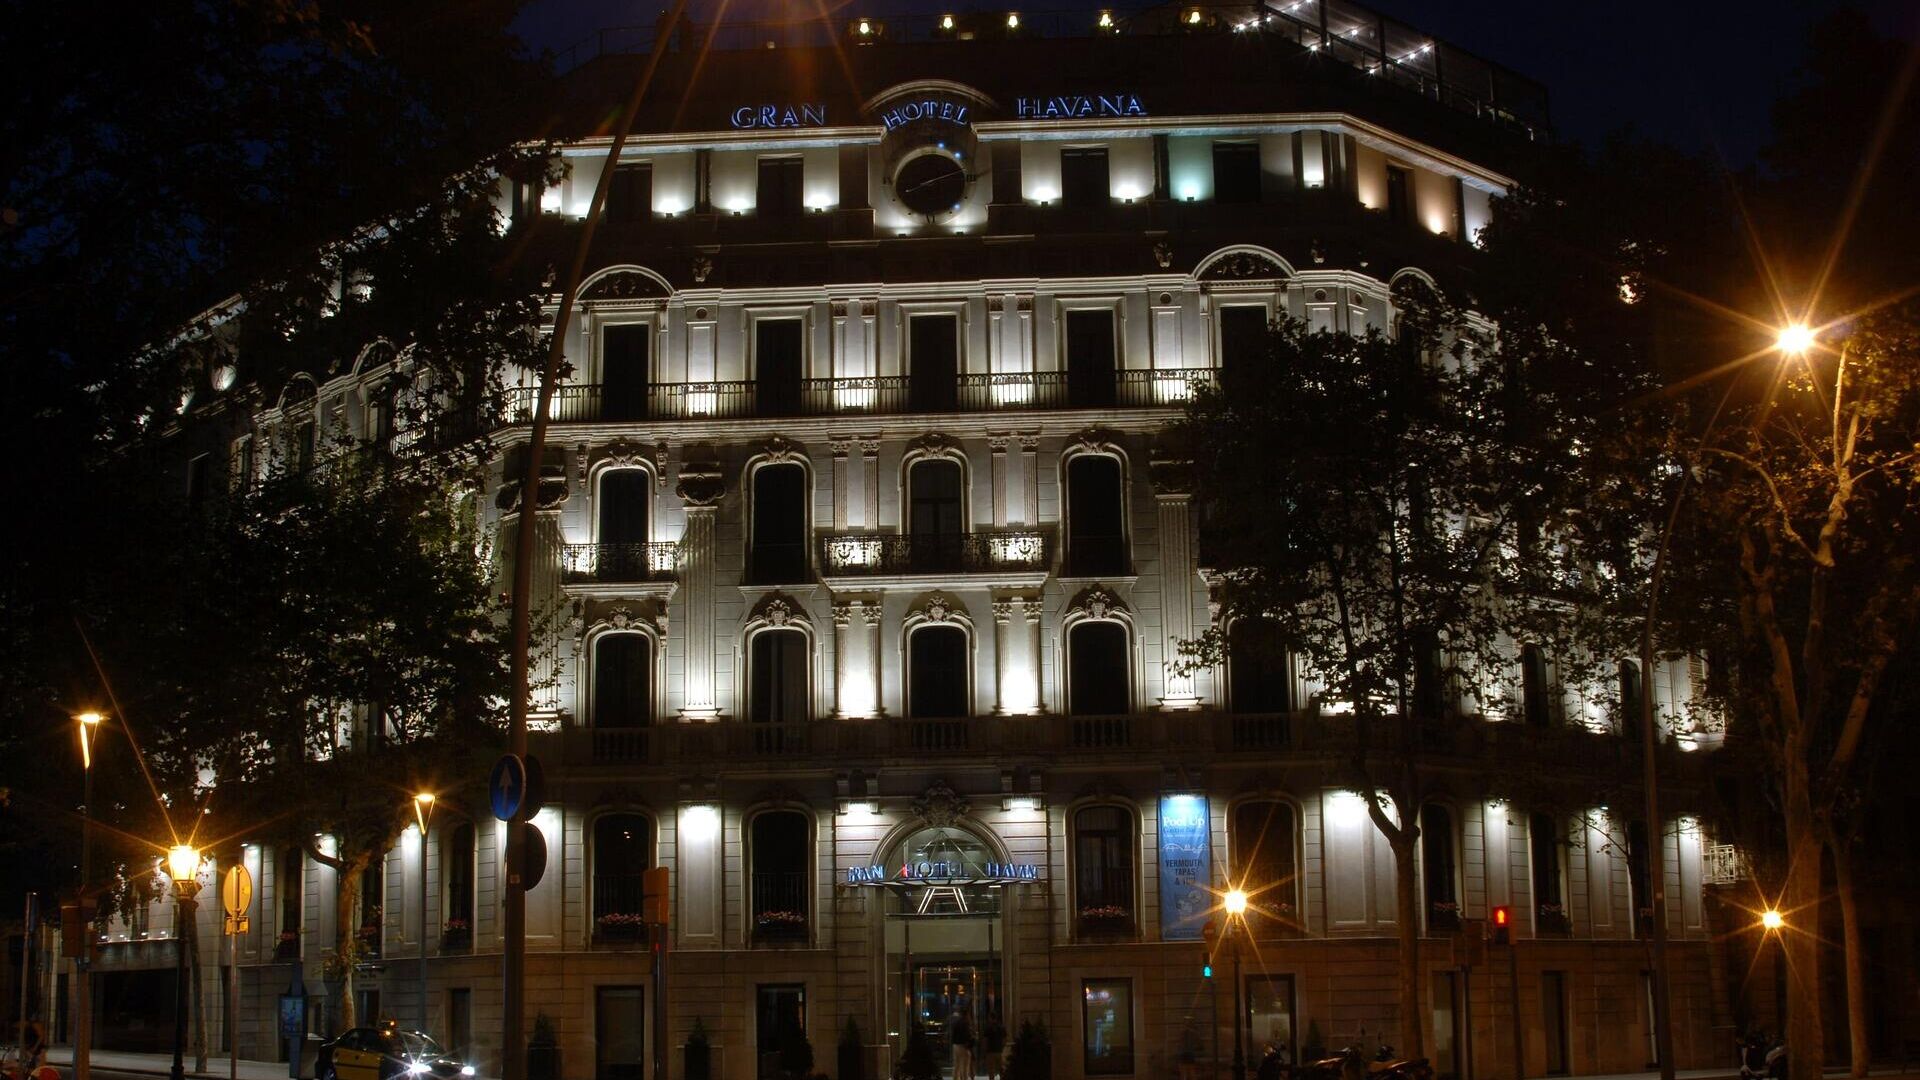 Vista nocturna sobre hotel en Barcelona - Sputnik Mundo, 1920, 17.08.2021